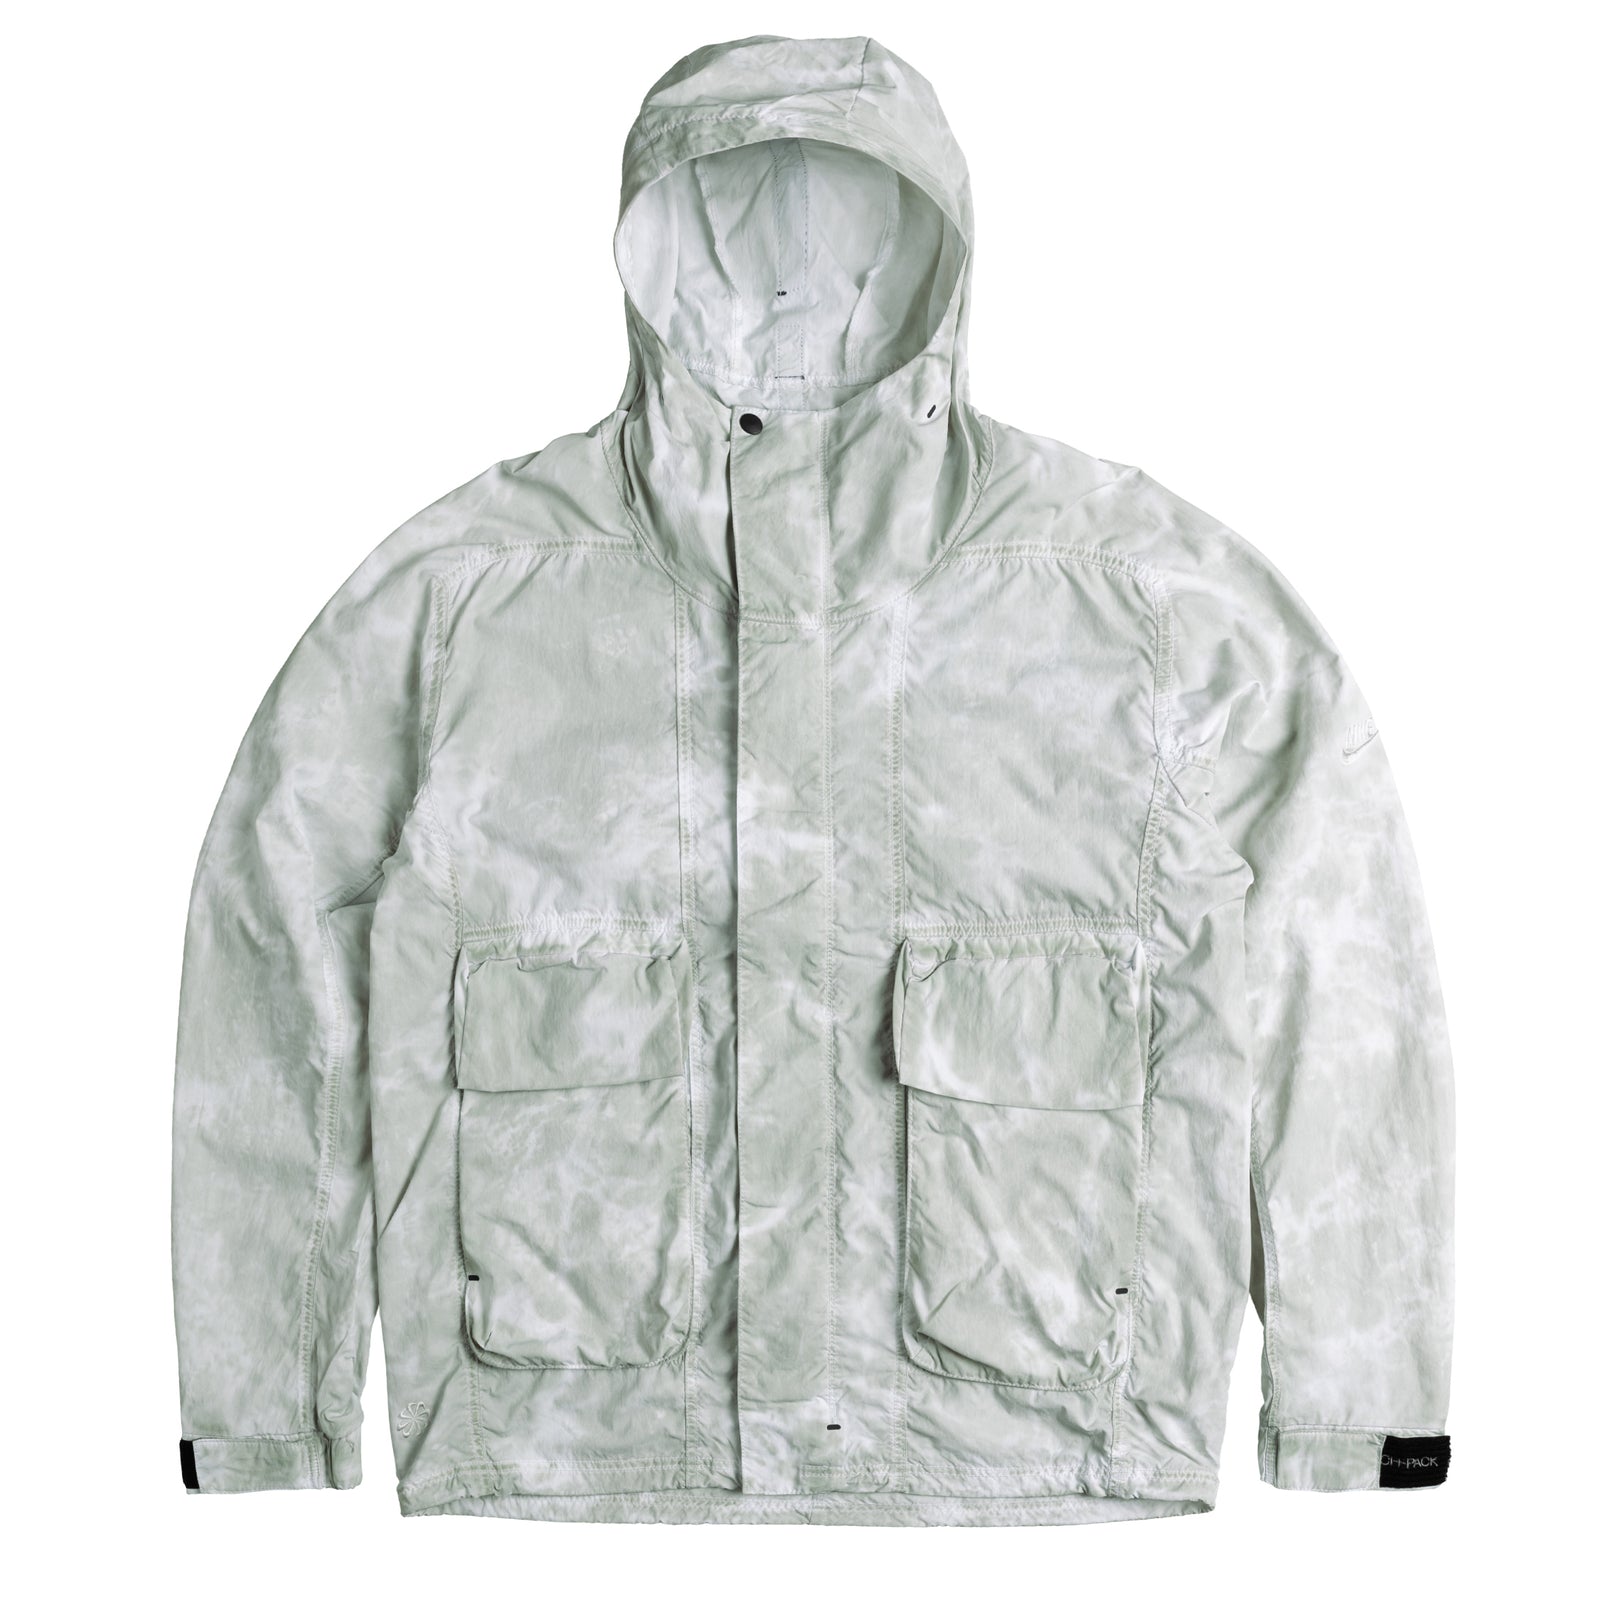 Nike Tech Pack Hooded Woven Jacket
Light Silver